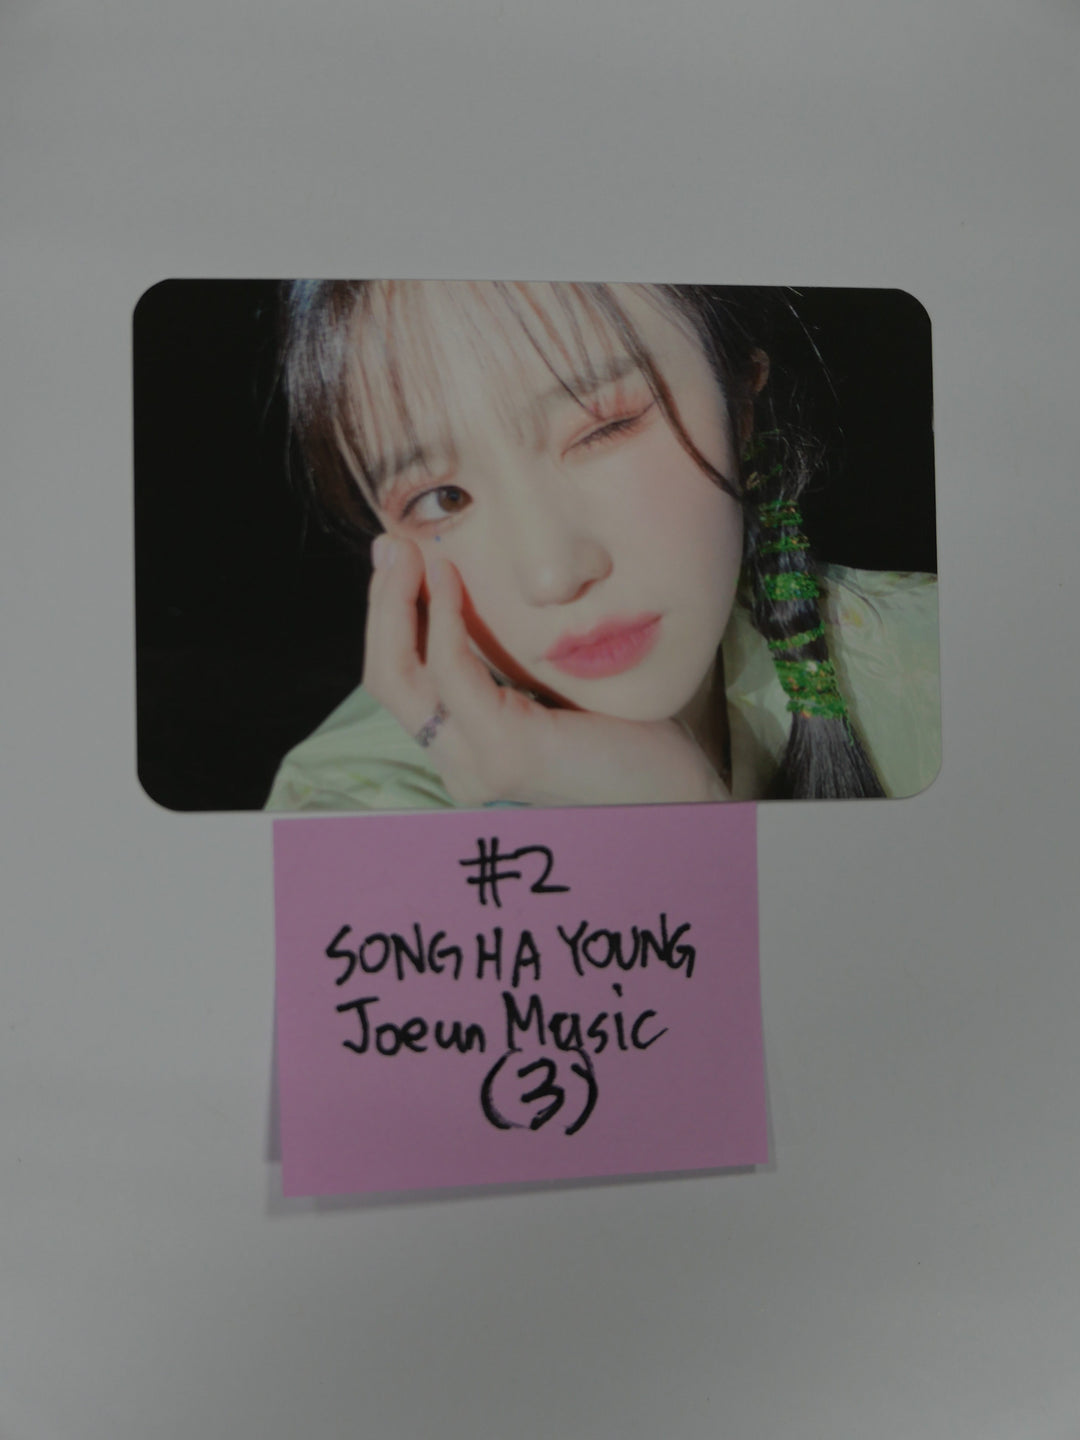 Fromis_9 "9 Way Ticket" -JoeunMusic Fan Sign Event Photocard